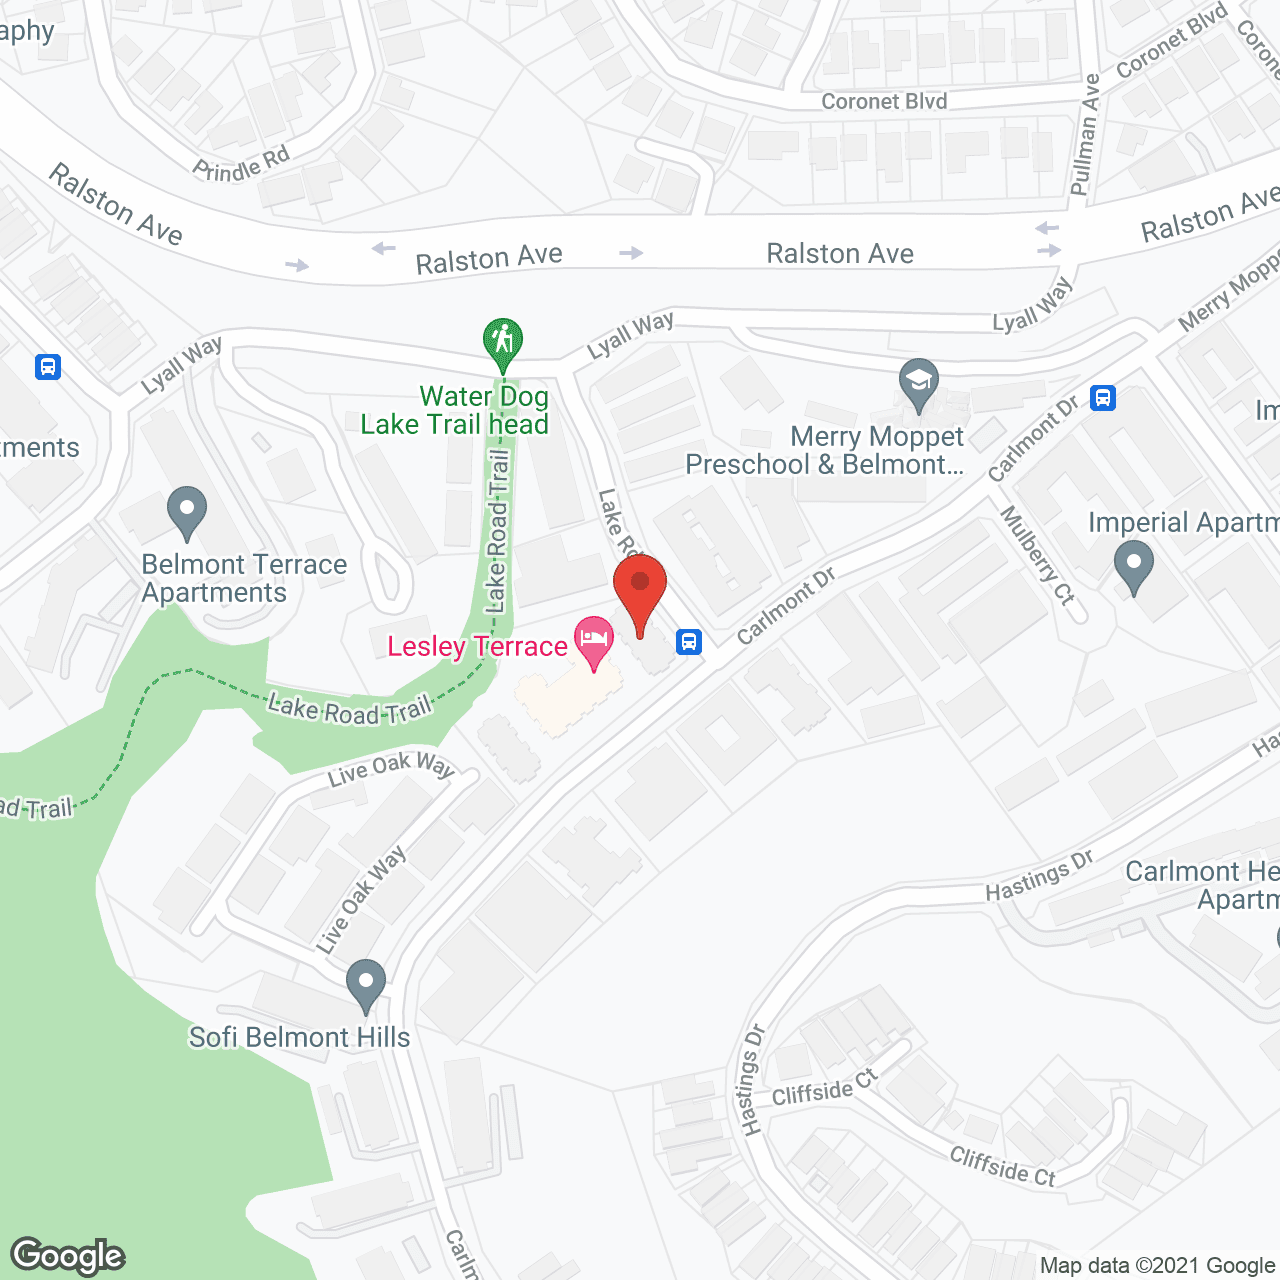 Lesley Terrace in google map